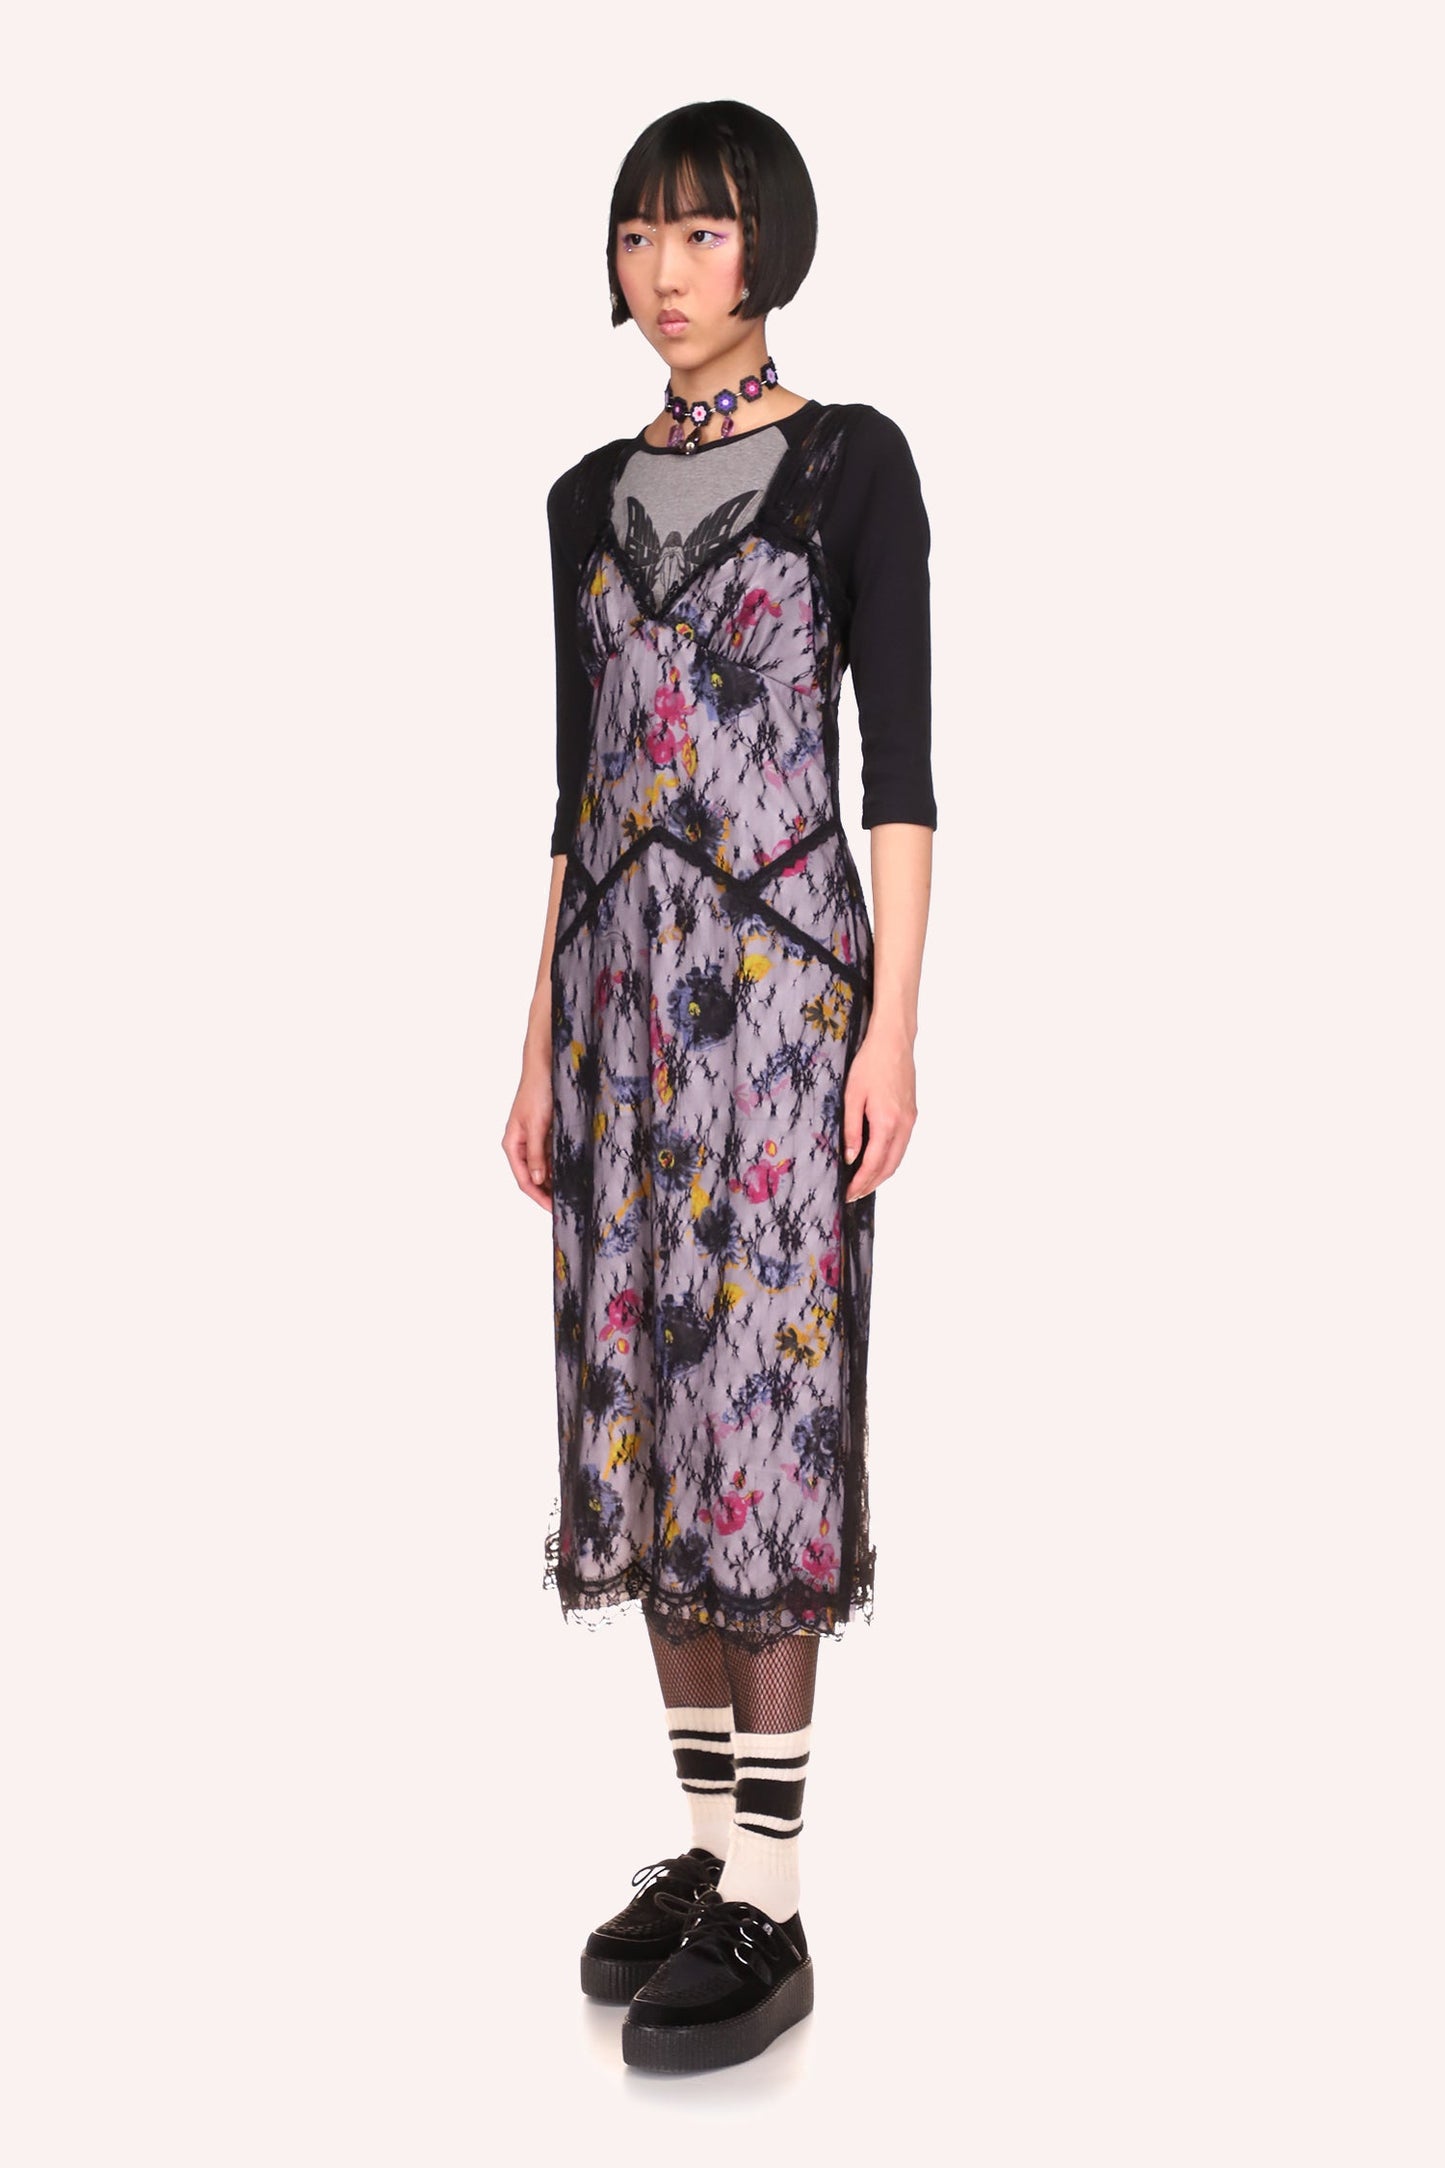 Slip Dress sleeveless, lilac, pink, yellow flowers, 2 straps, black hems on side, mid-legs long